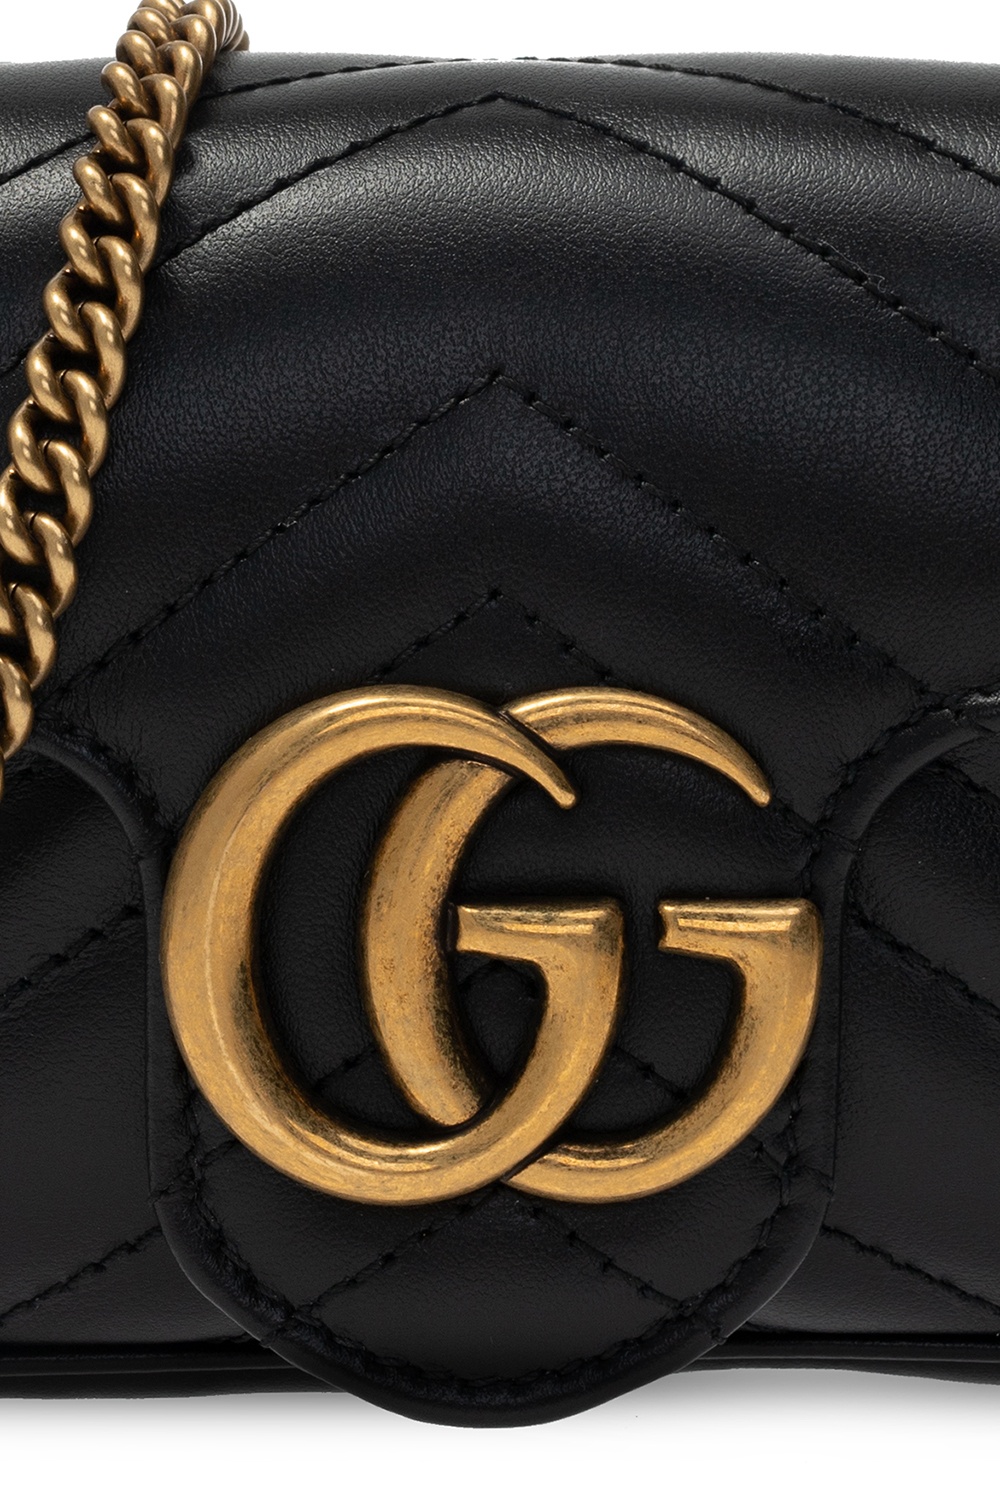 Black ‘GG Marmont’ shoulder bag Gucci - Vitkac GB